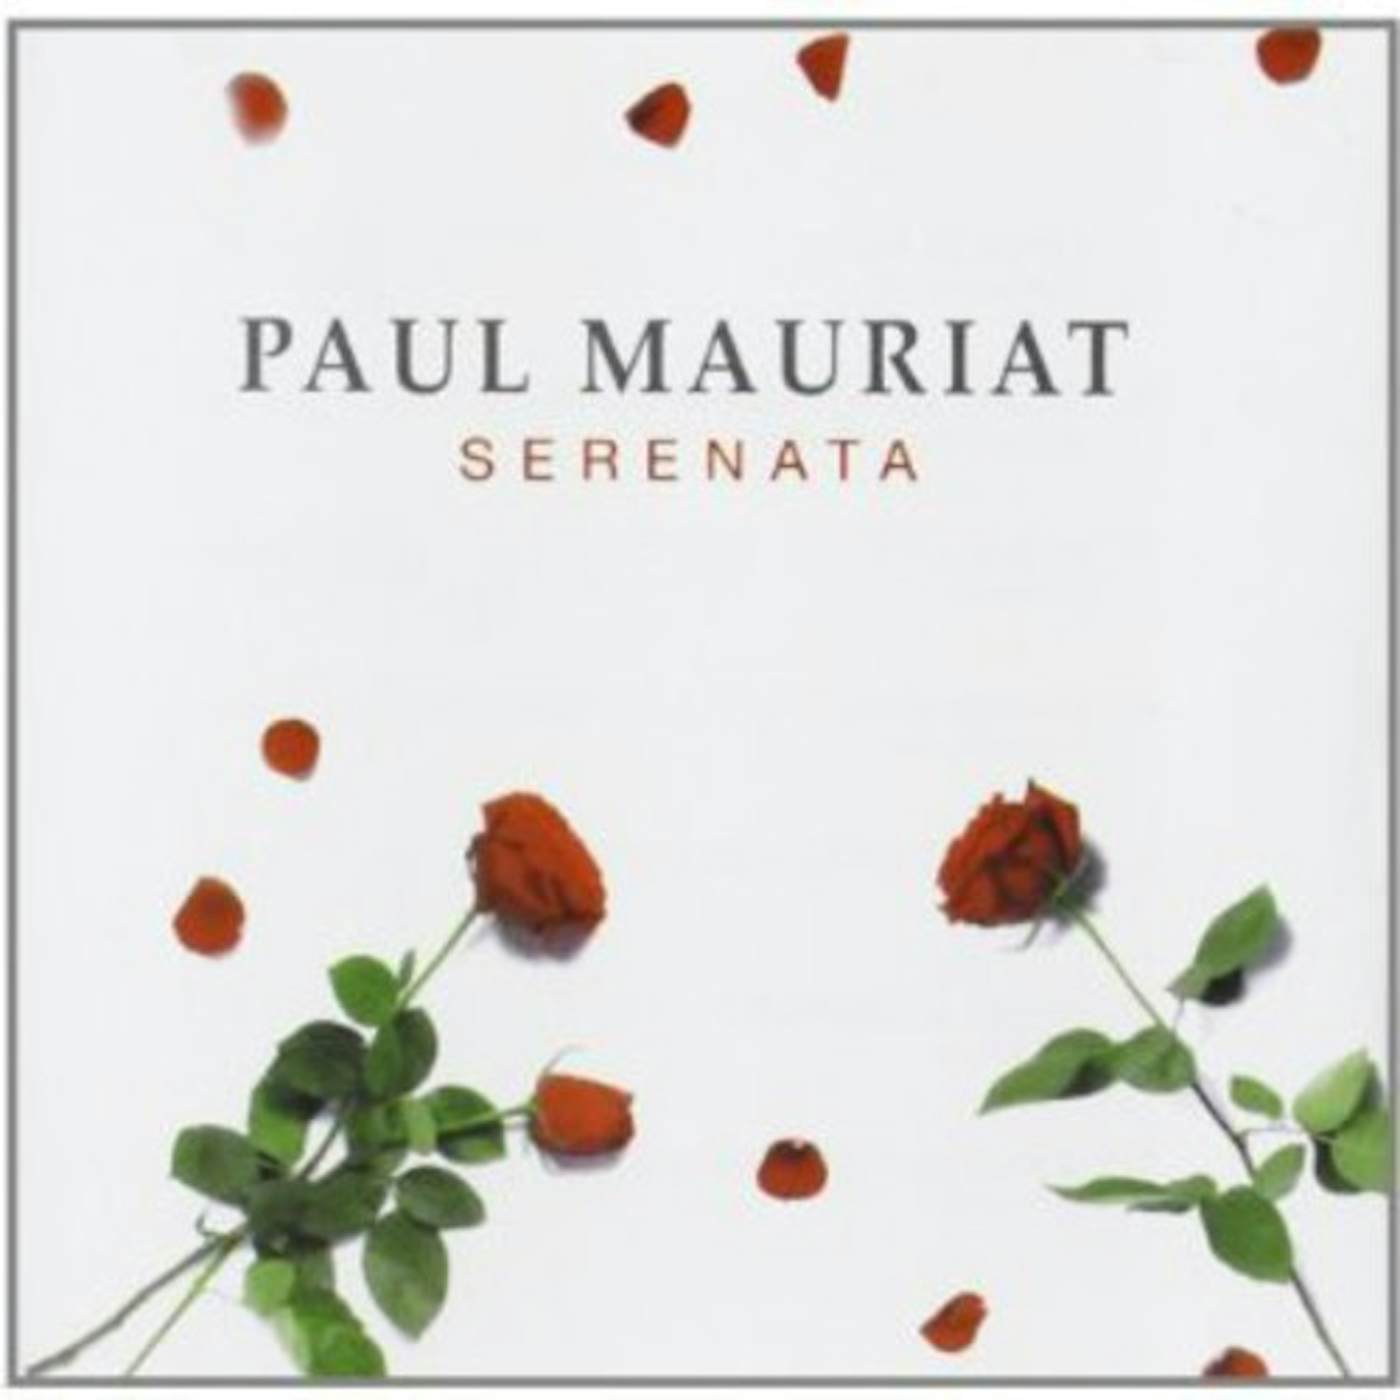 Paul Mauriat SERENATA CD